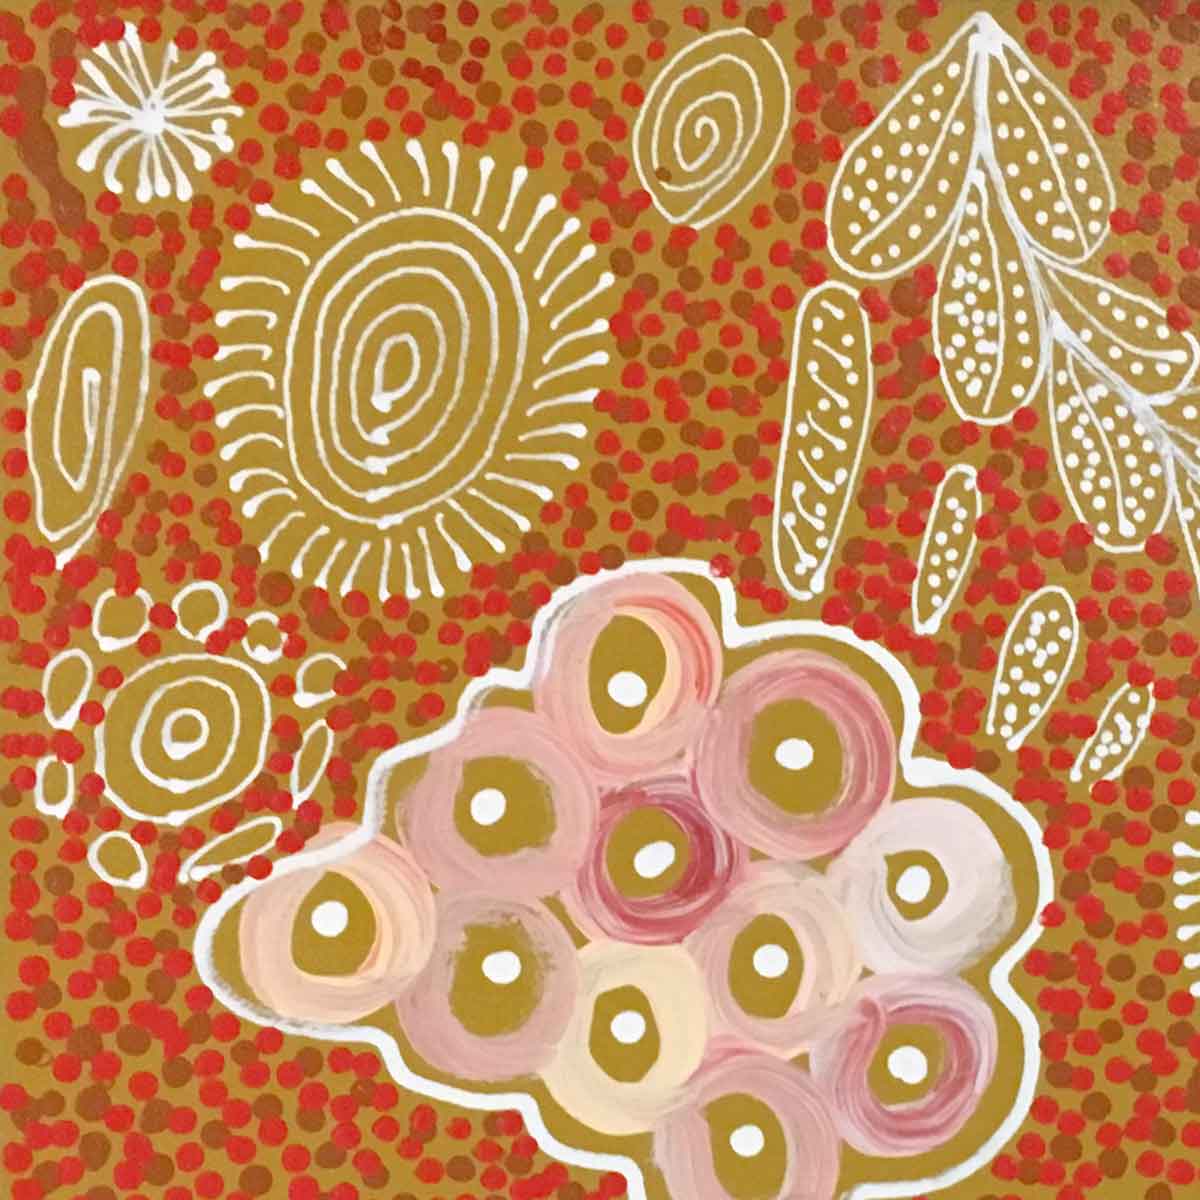 Pencil Yam by Janet golder Kngwarreye | Stretched. Australian Aboriginal Art.